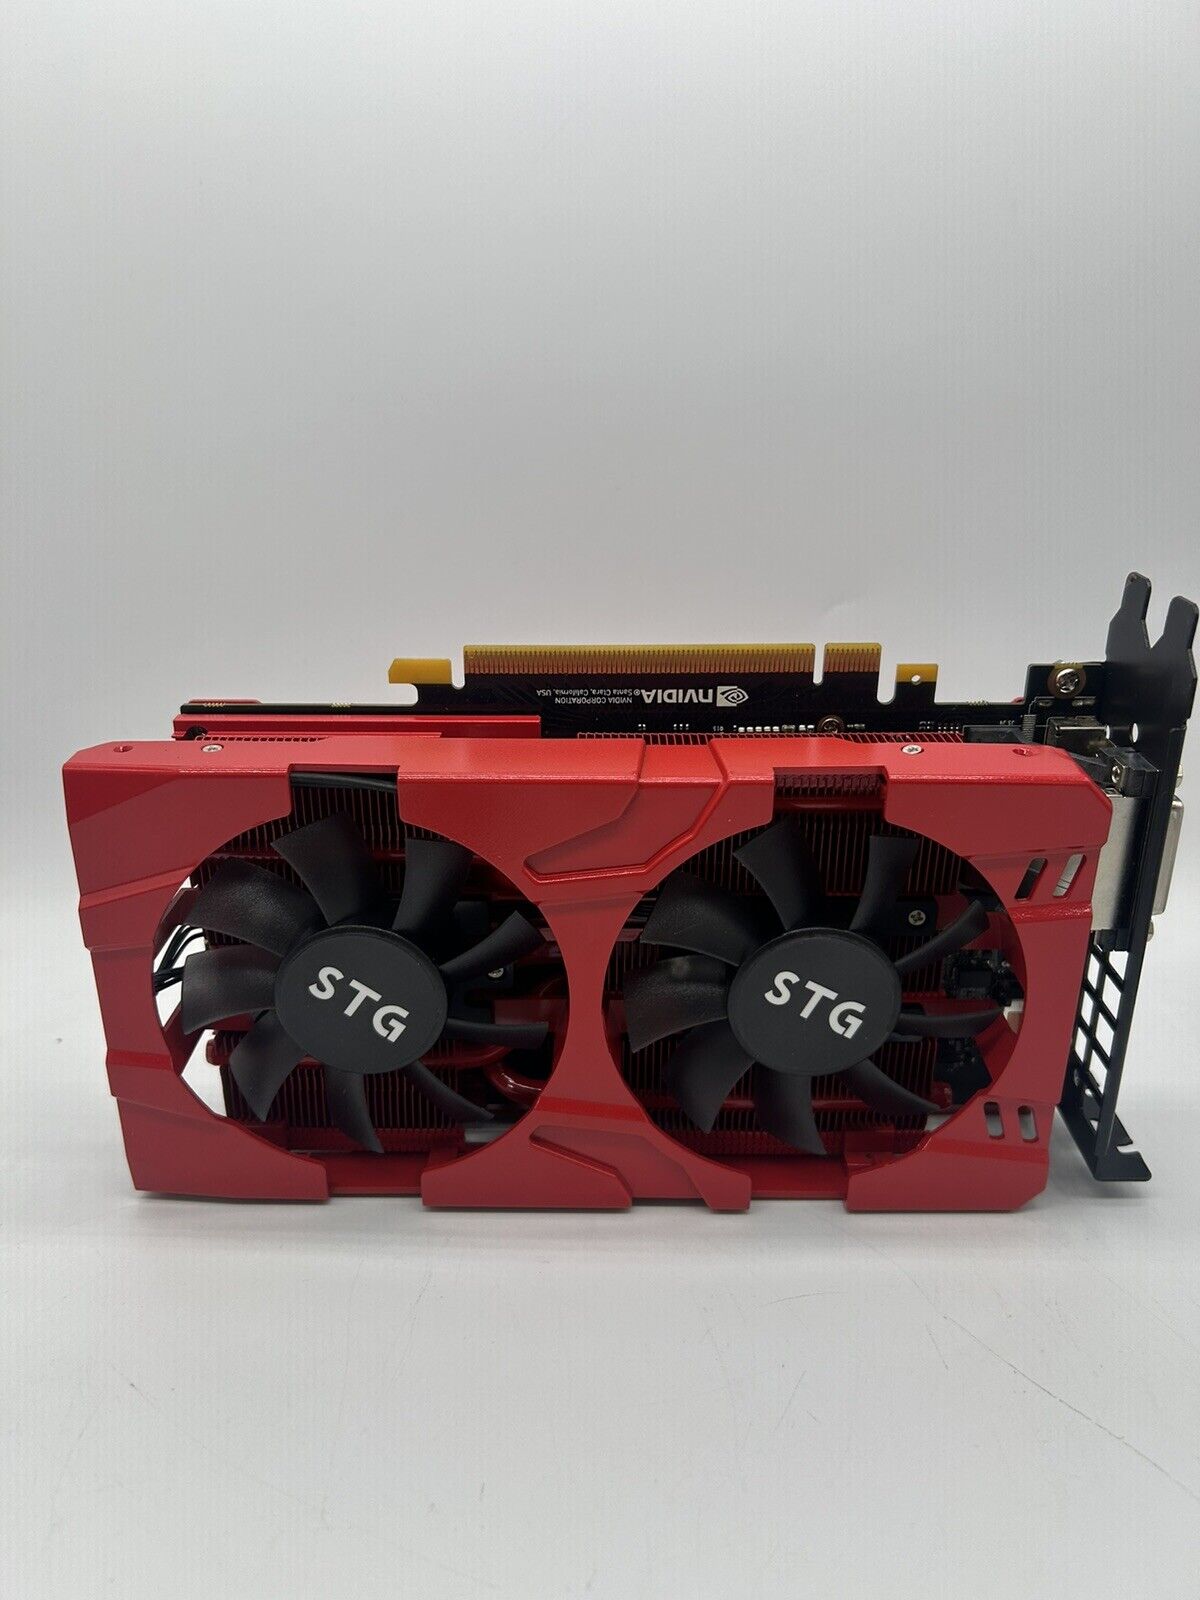 NVIDIA GeForce RTX 2070 8GB GDDR6 PCI GPU STG INNO3D Red Taken Out Of Prebuilt